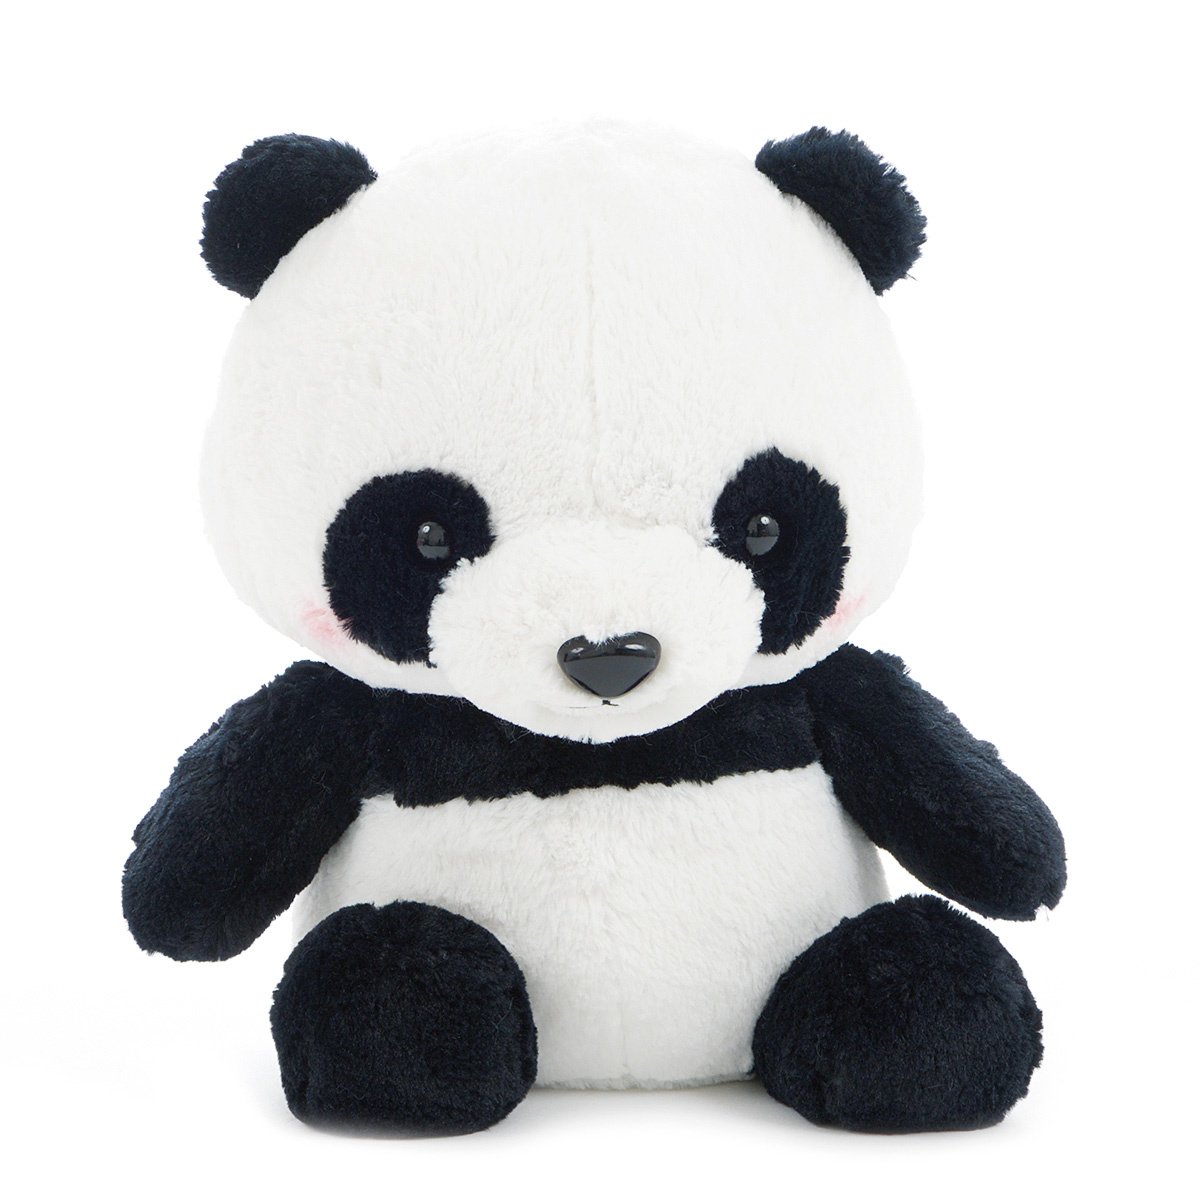 Plush Panda, Amuse, Honwaka Panda Baby, Panda Boy, Black / White, 15 Inches